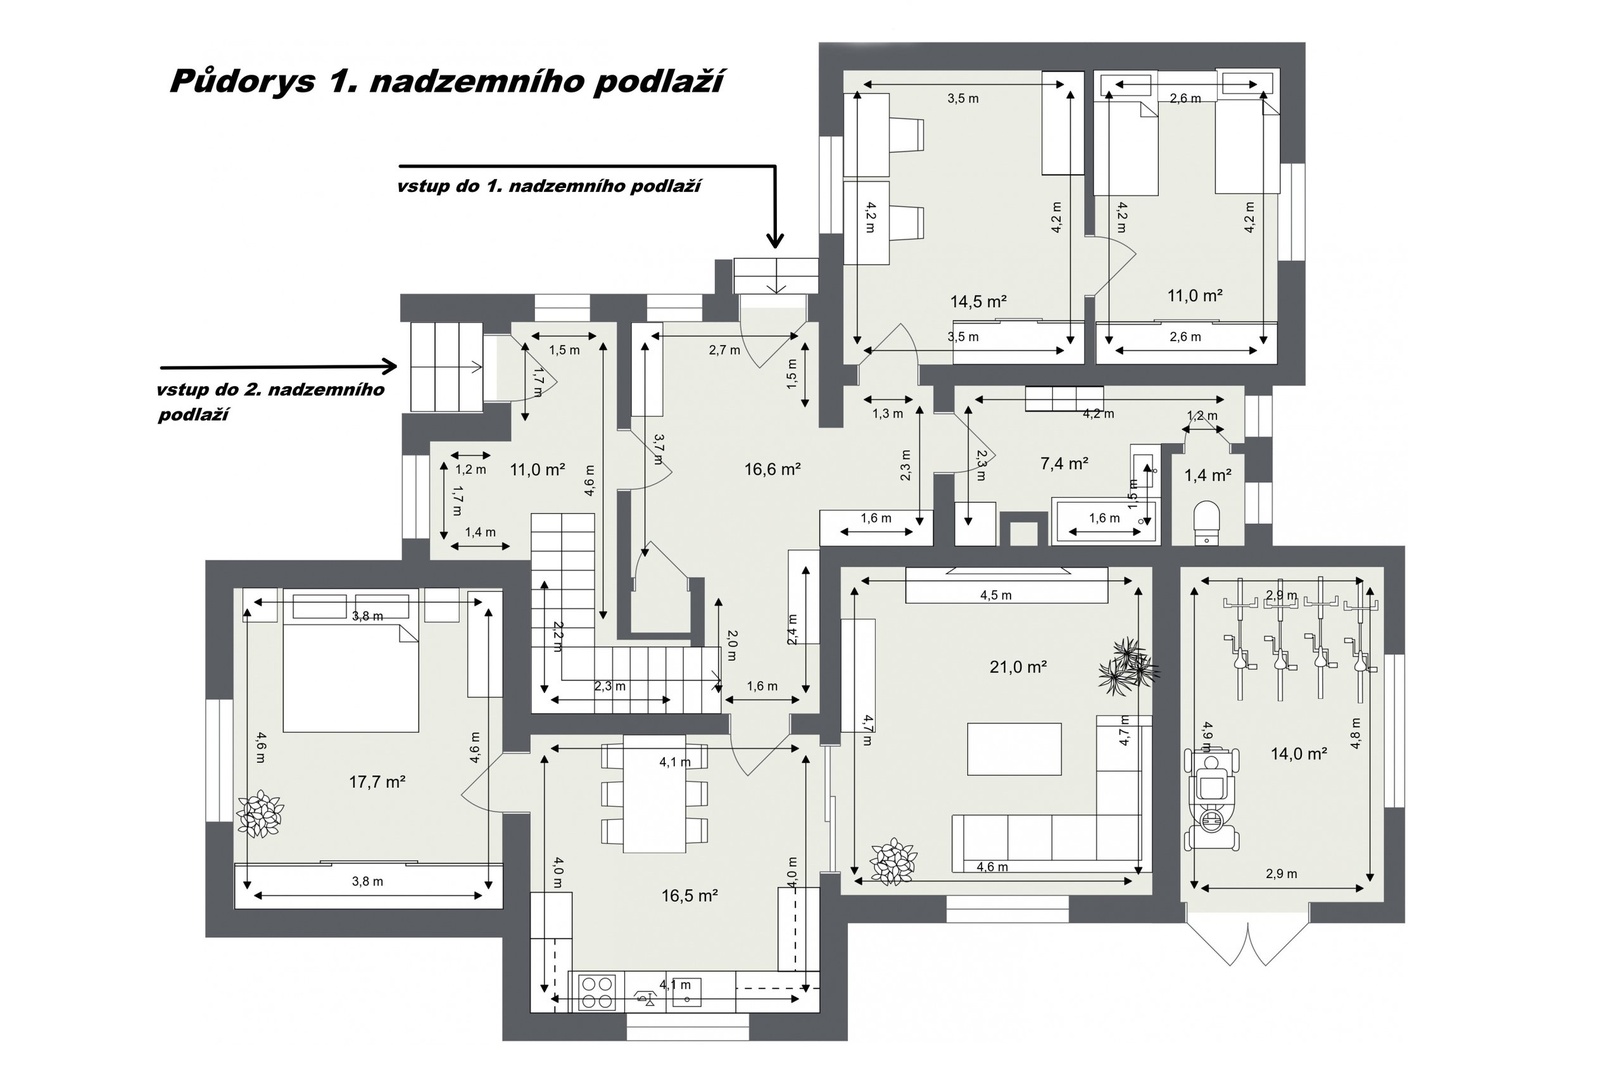 Floorplan letterhead - Chlumec - Mimov 1NP - 2D Floor Plan